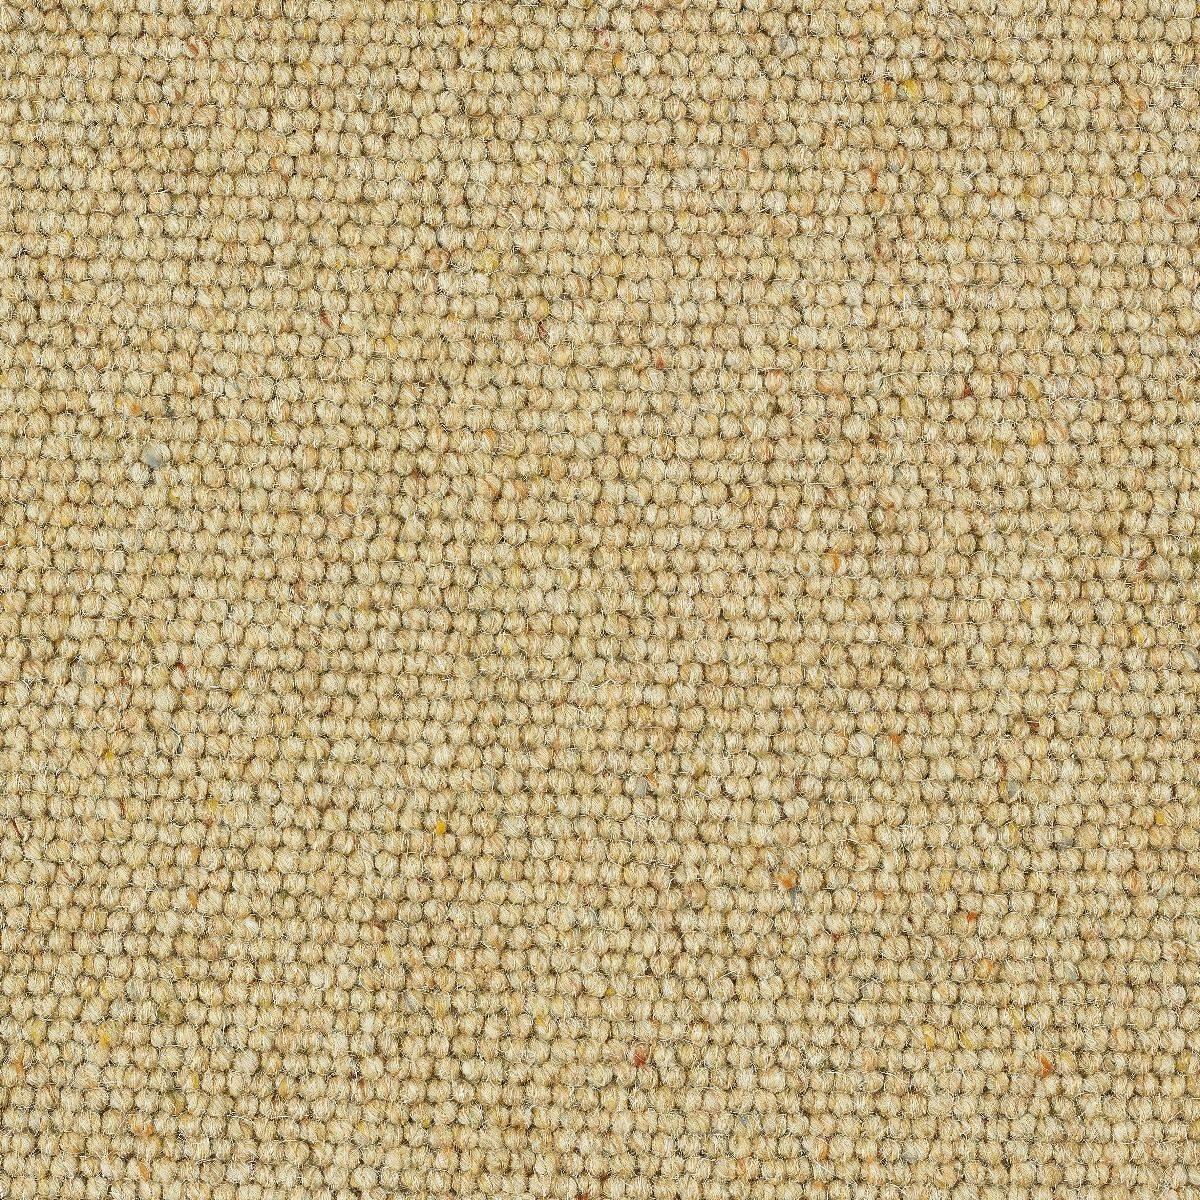 Abingdon Carpets Wilton Royal Charter Berber Loop Honey Gold